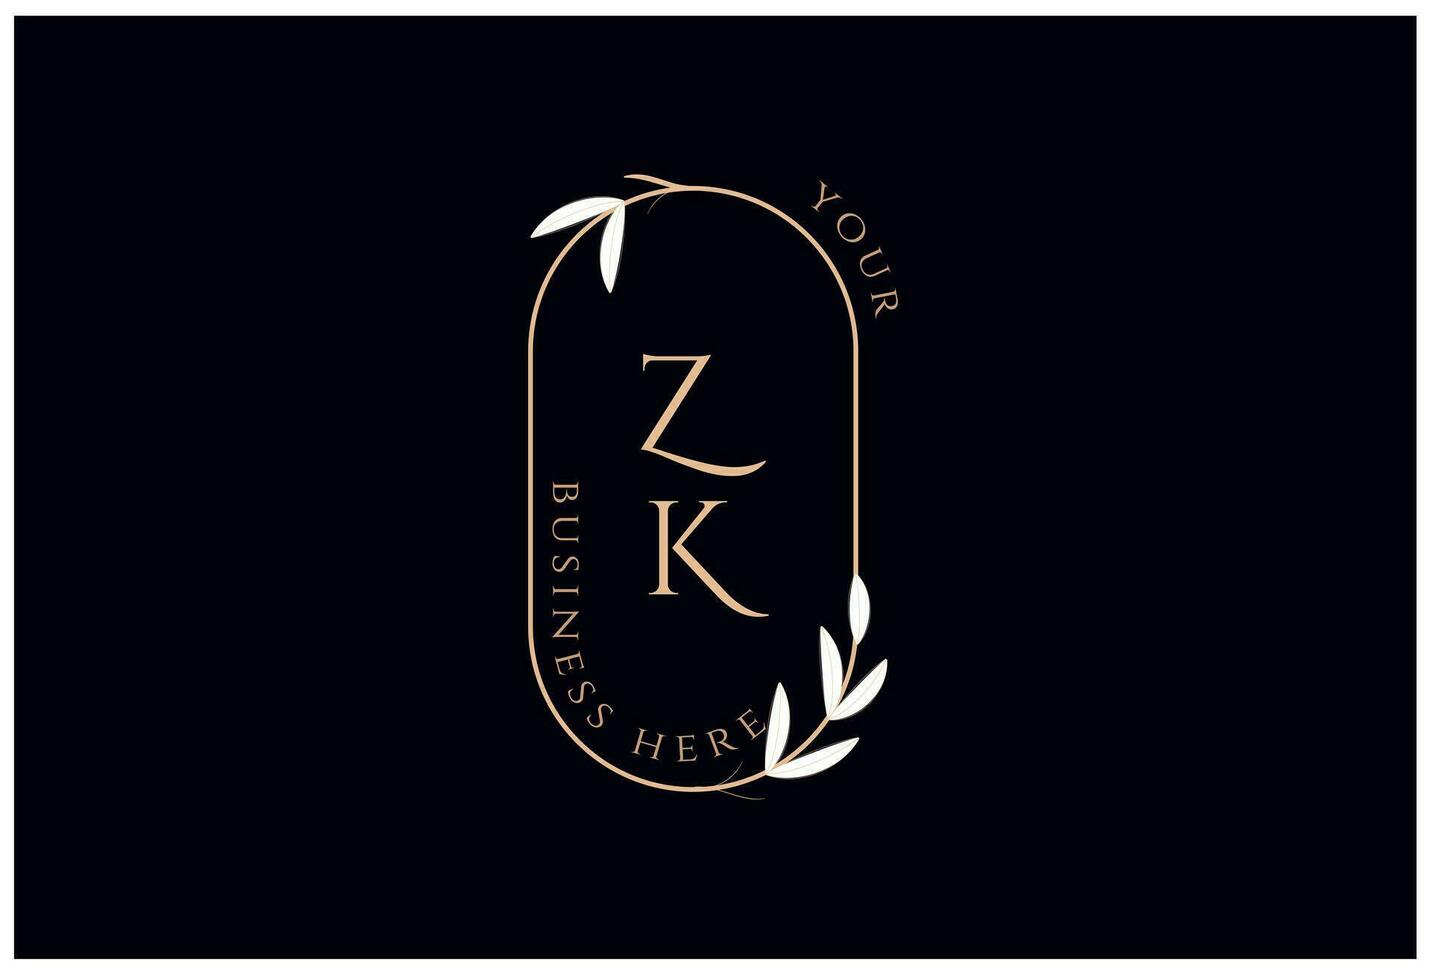 zk vector logo with wedding ceremony for branding design